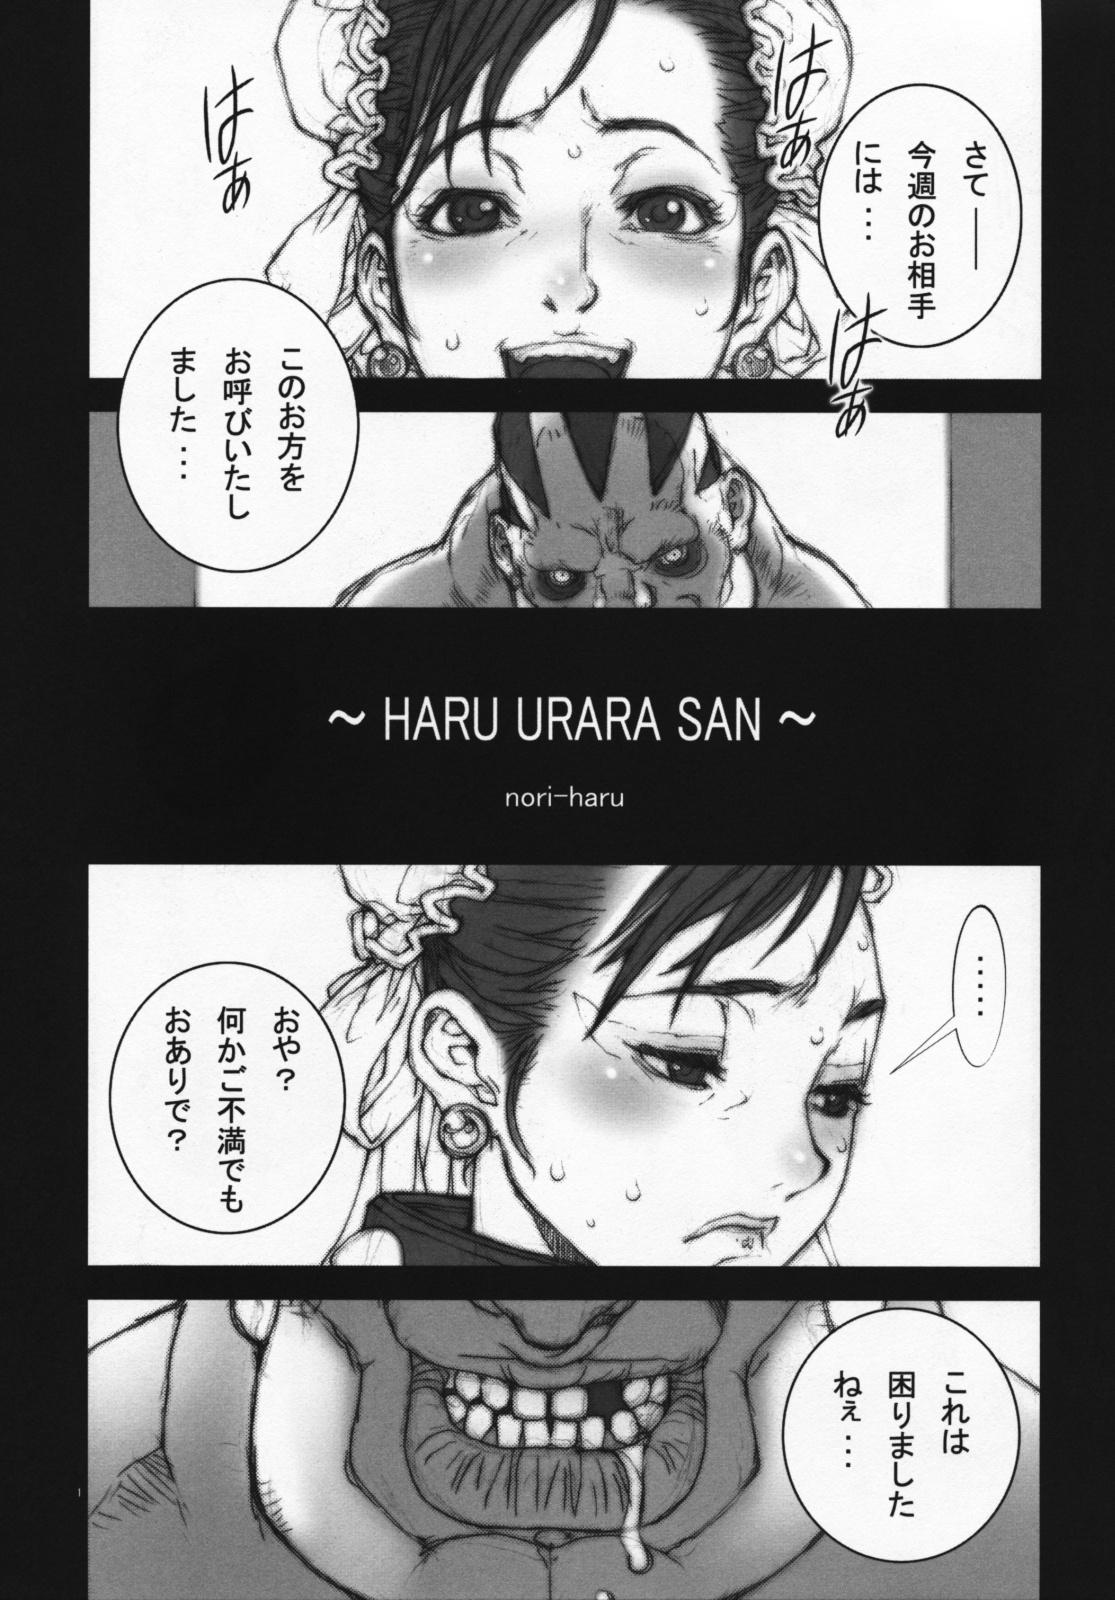 Haru Urara 3 Page 2 Of 18 street fighter hentai comic, Haru Urara 3 Page 2 ...